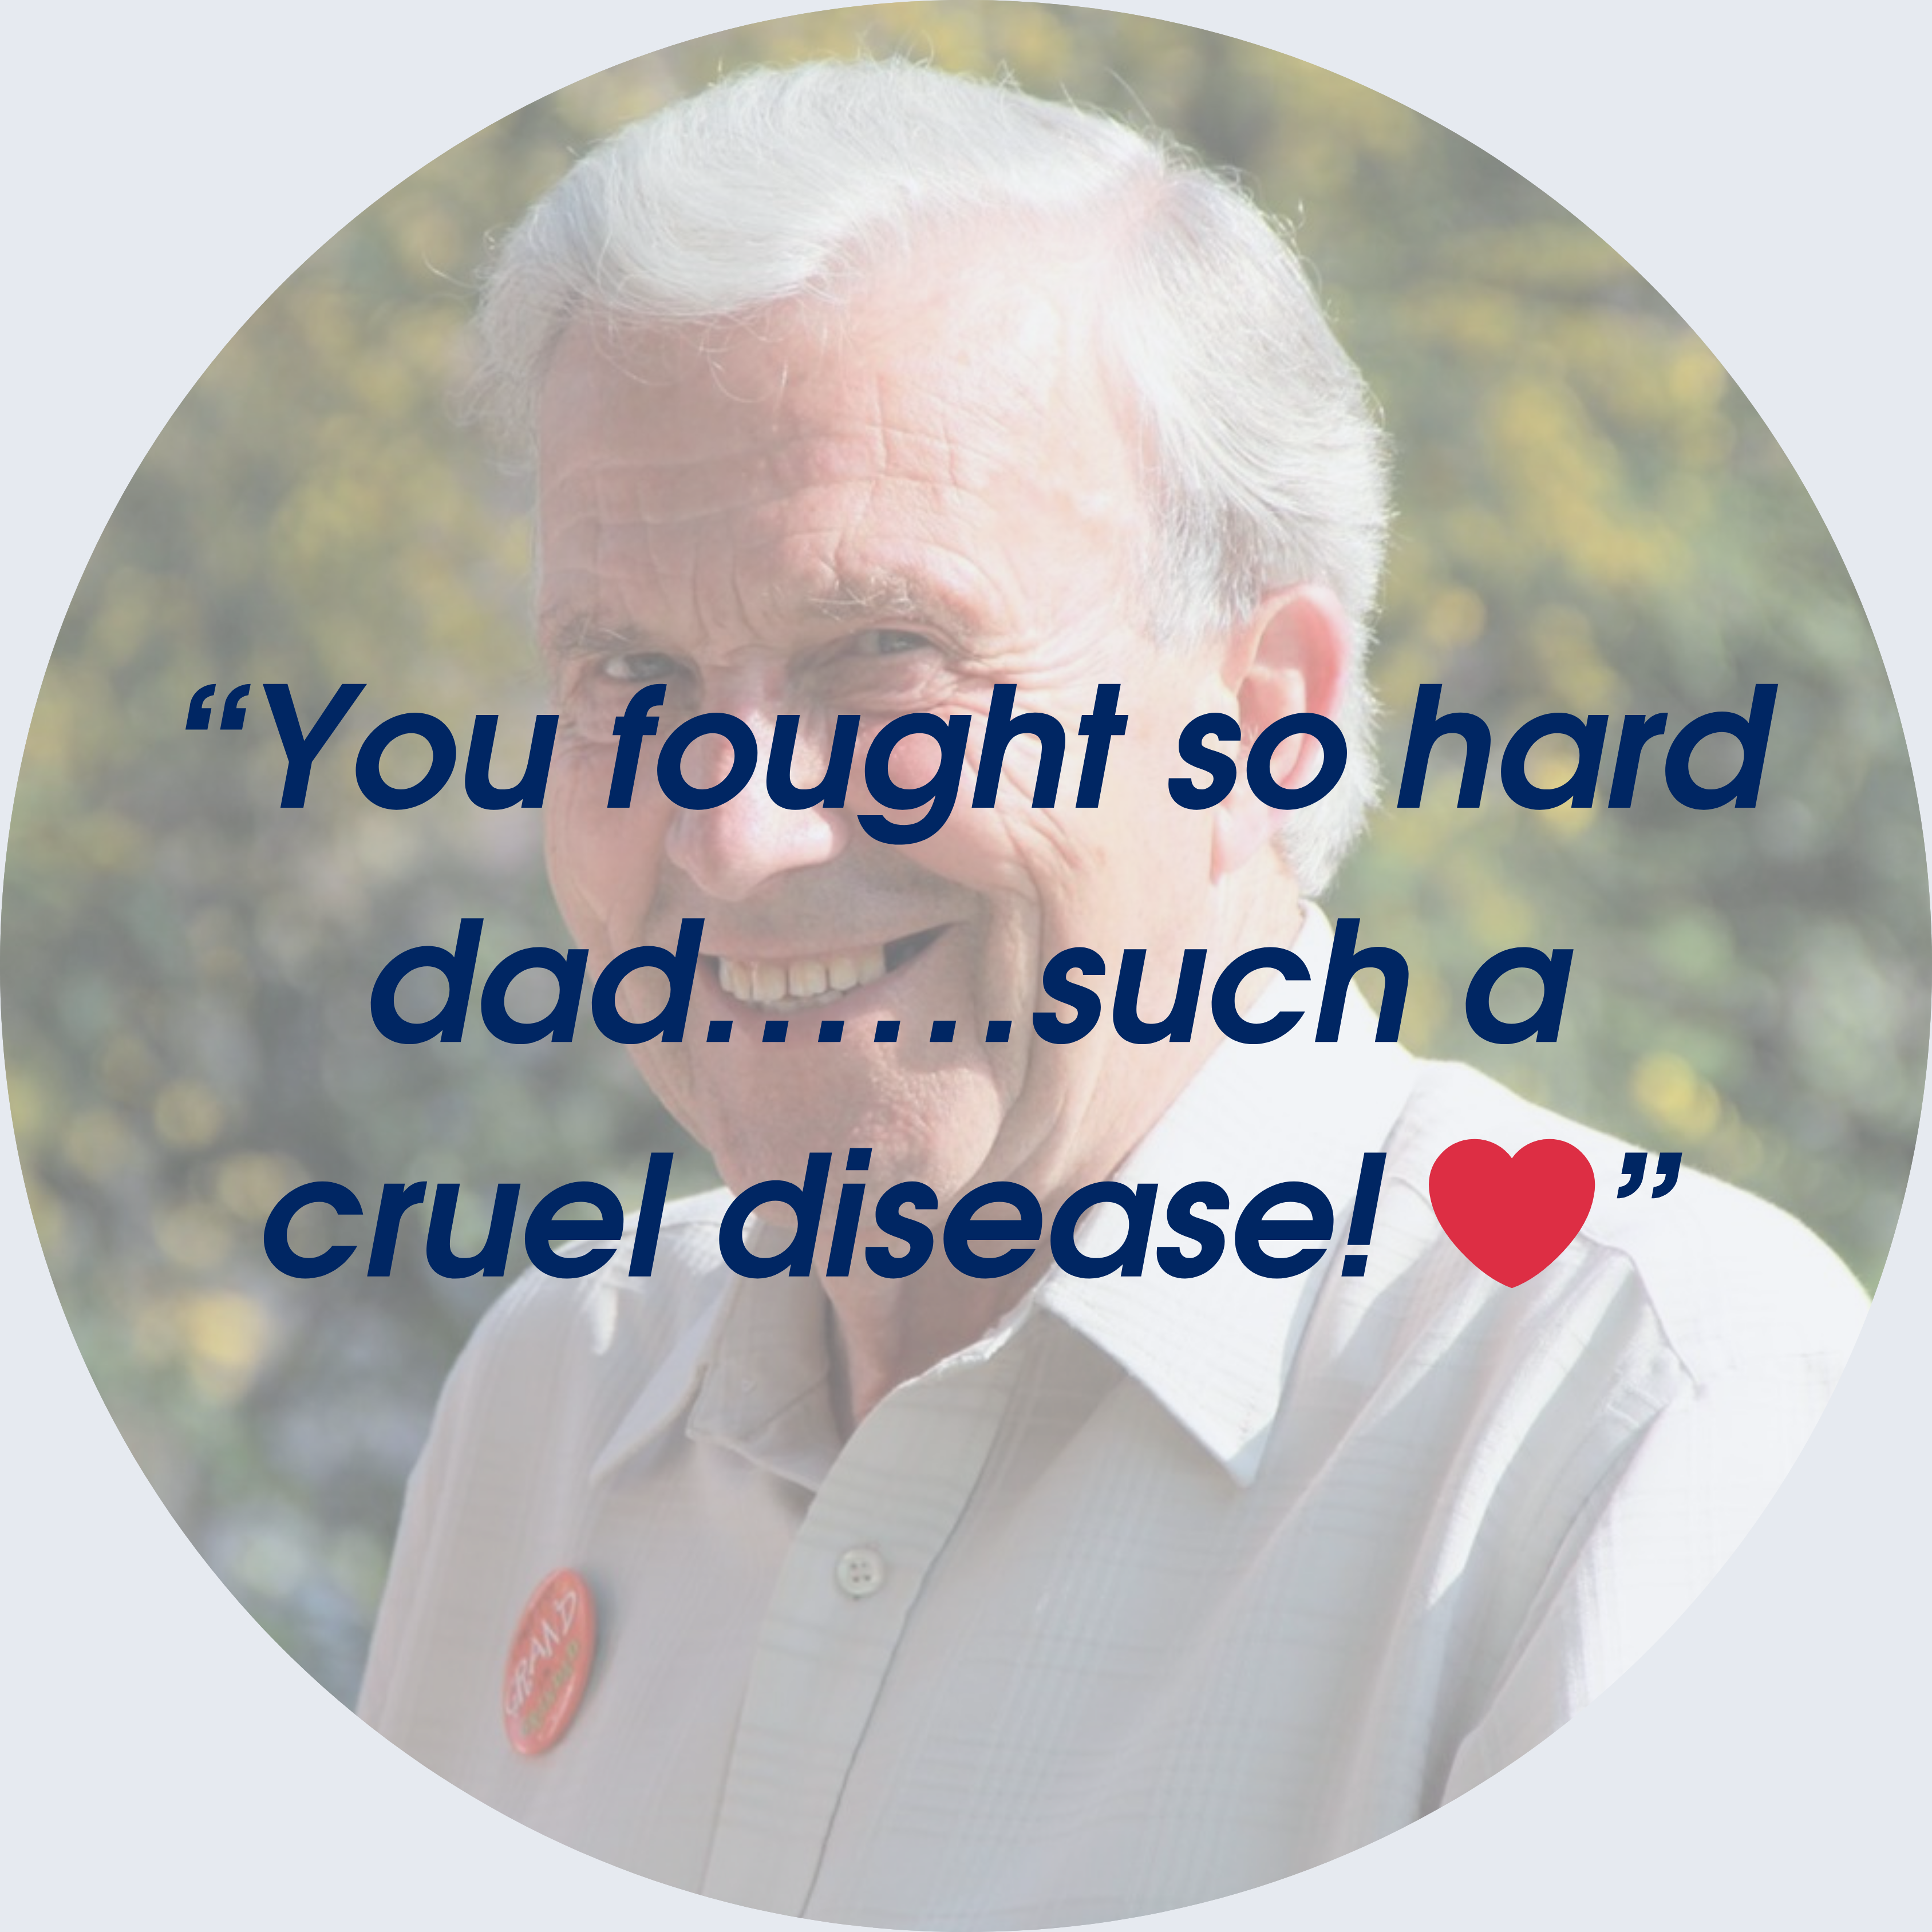 You fought so hard dad……such a cruel disease! 